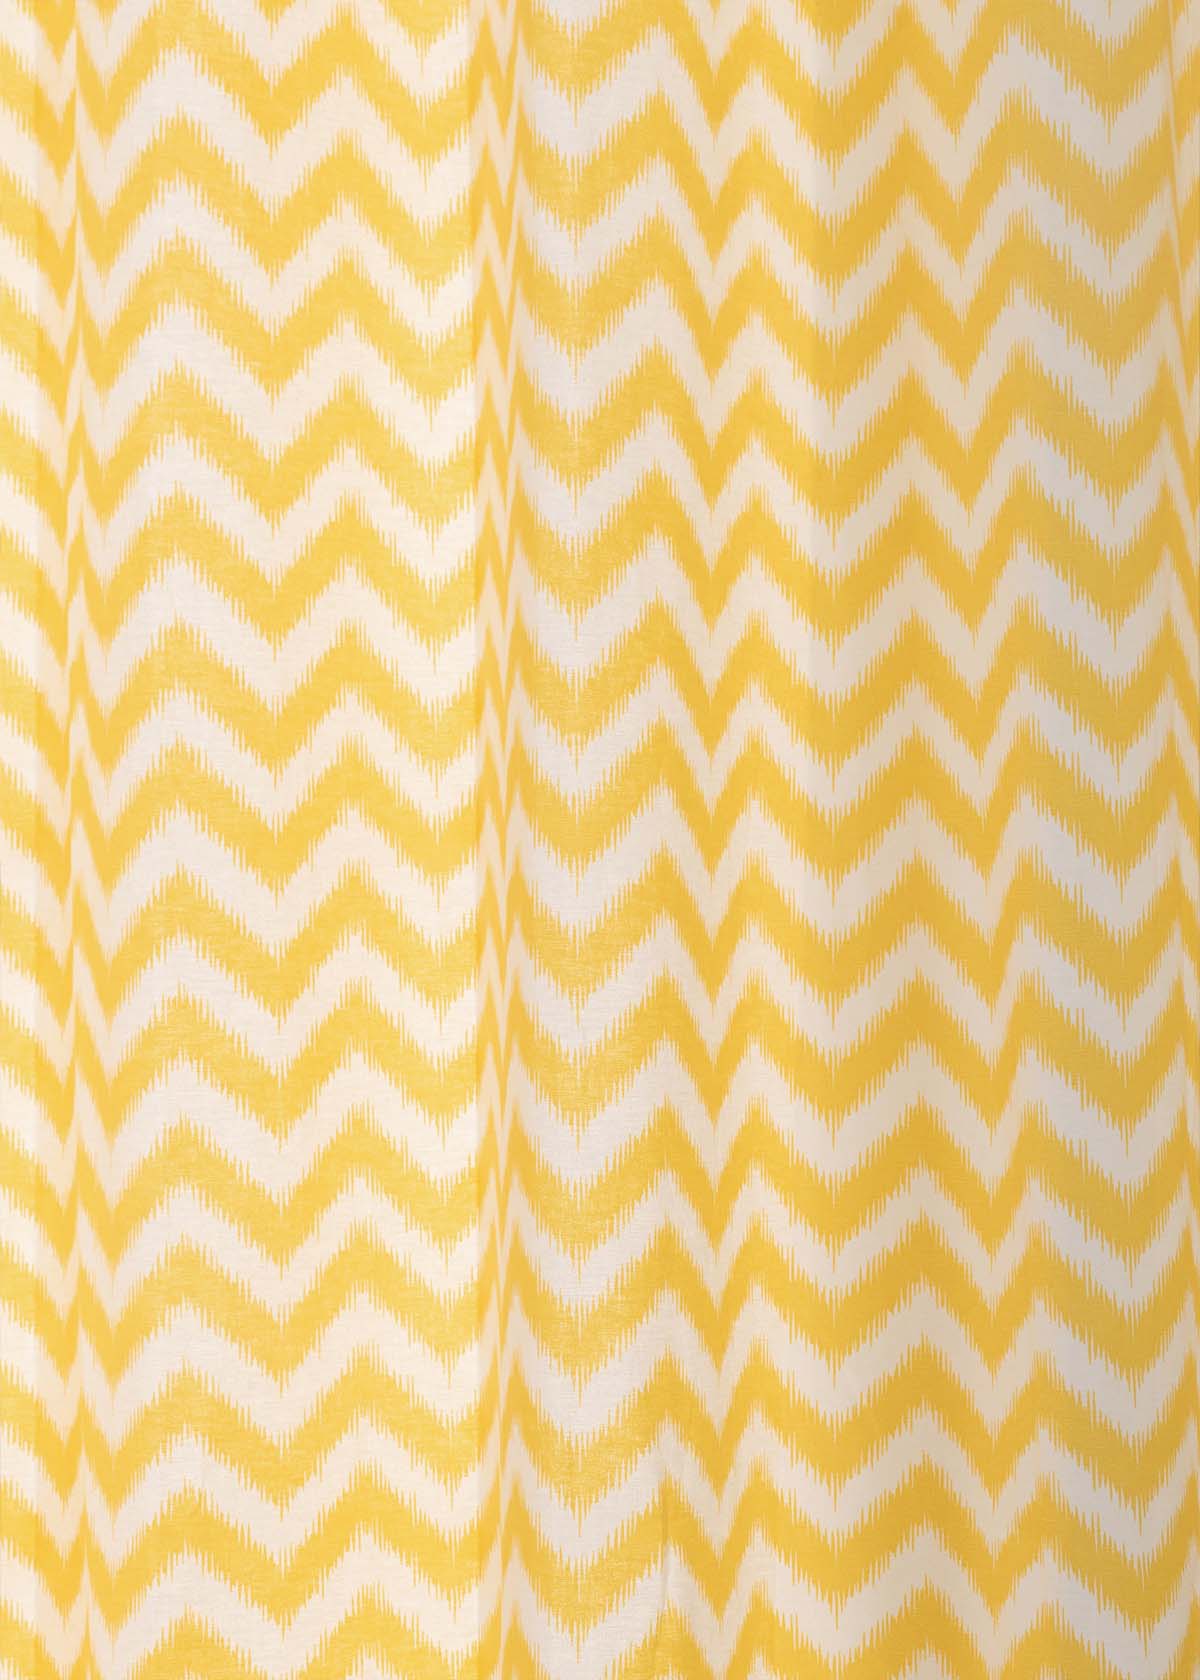 Ikat Chevron Printed Cotton Curtain - Yellow